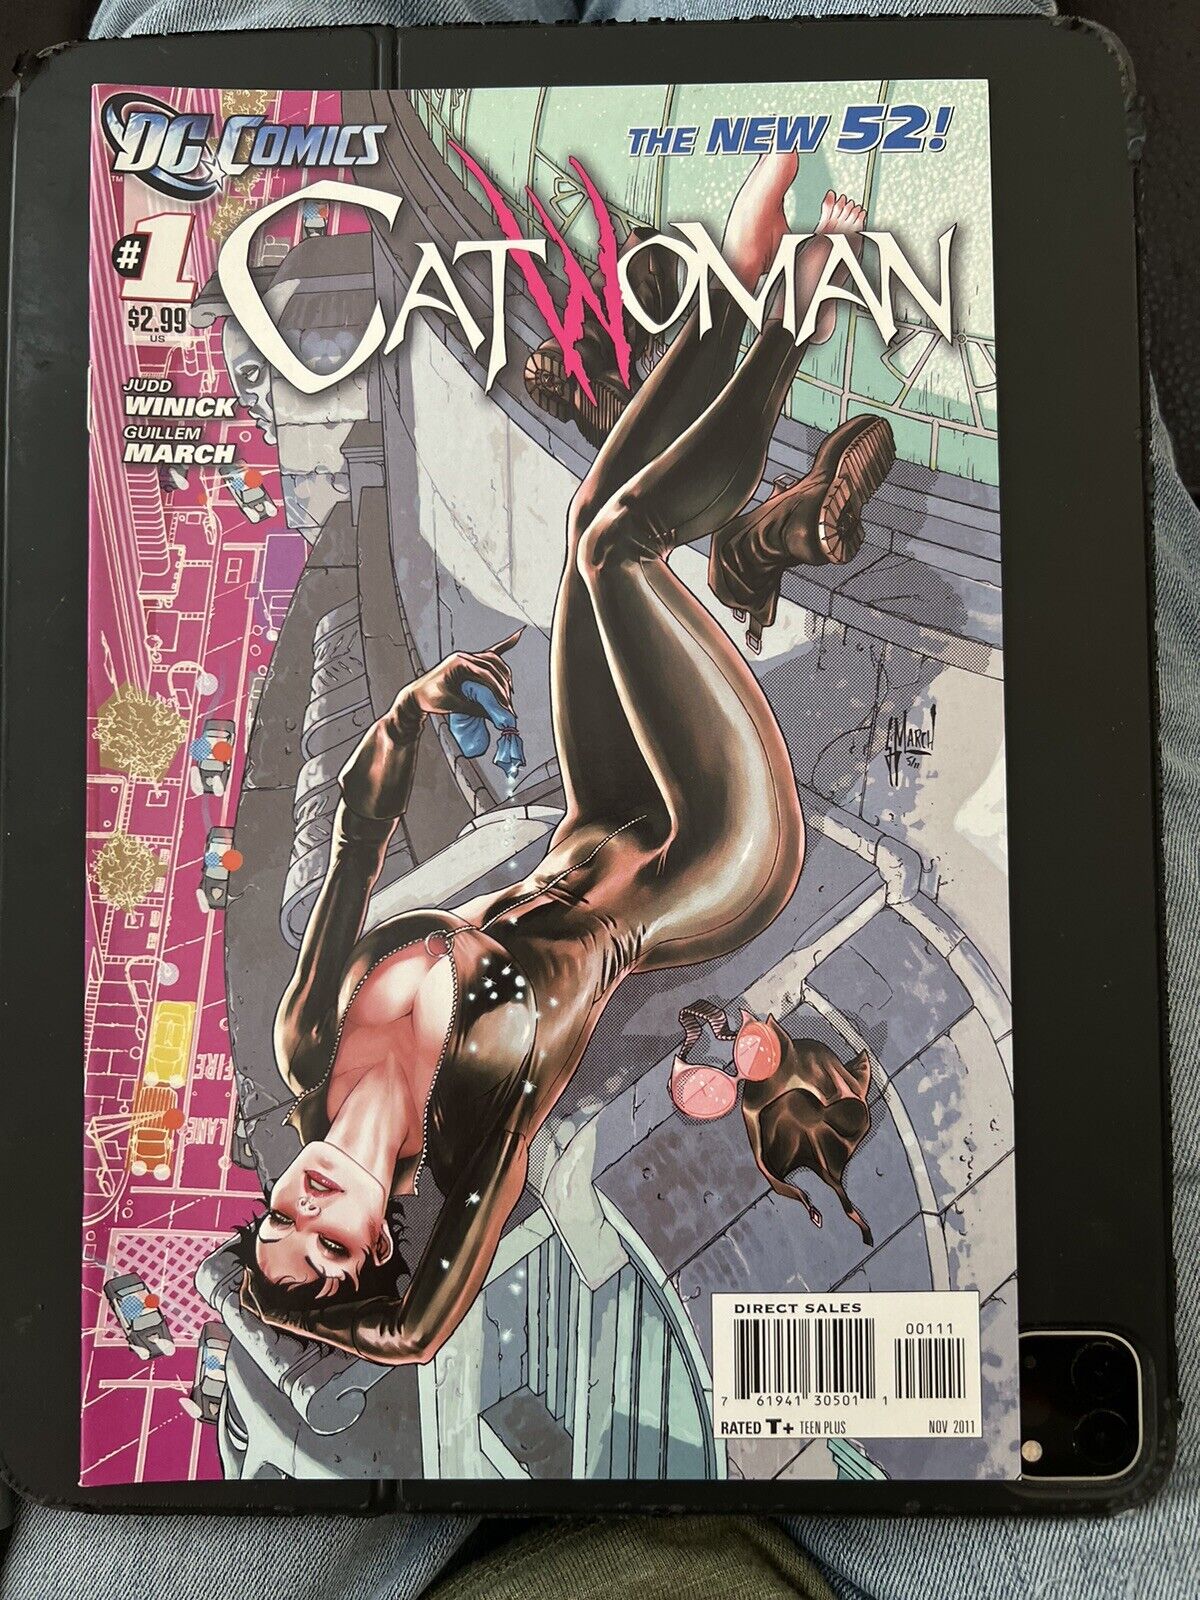 Catwoman #1 (DC Comics July 2012)